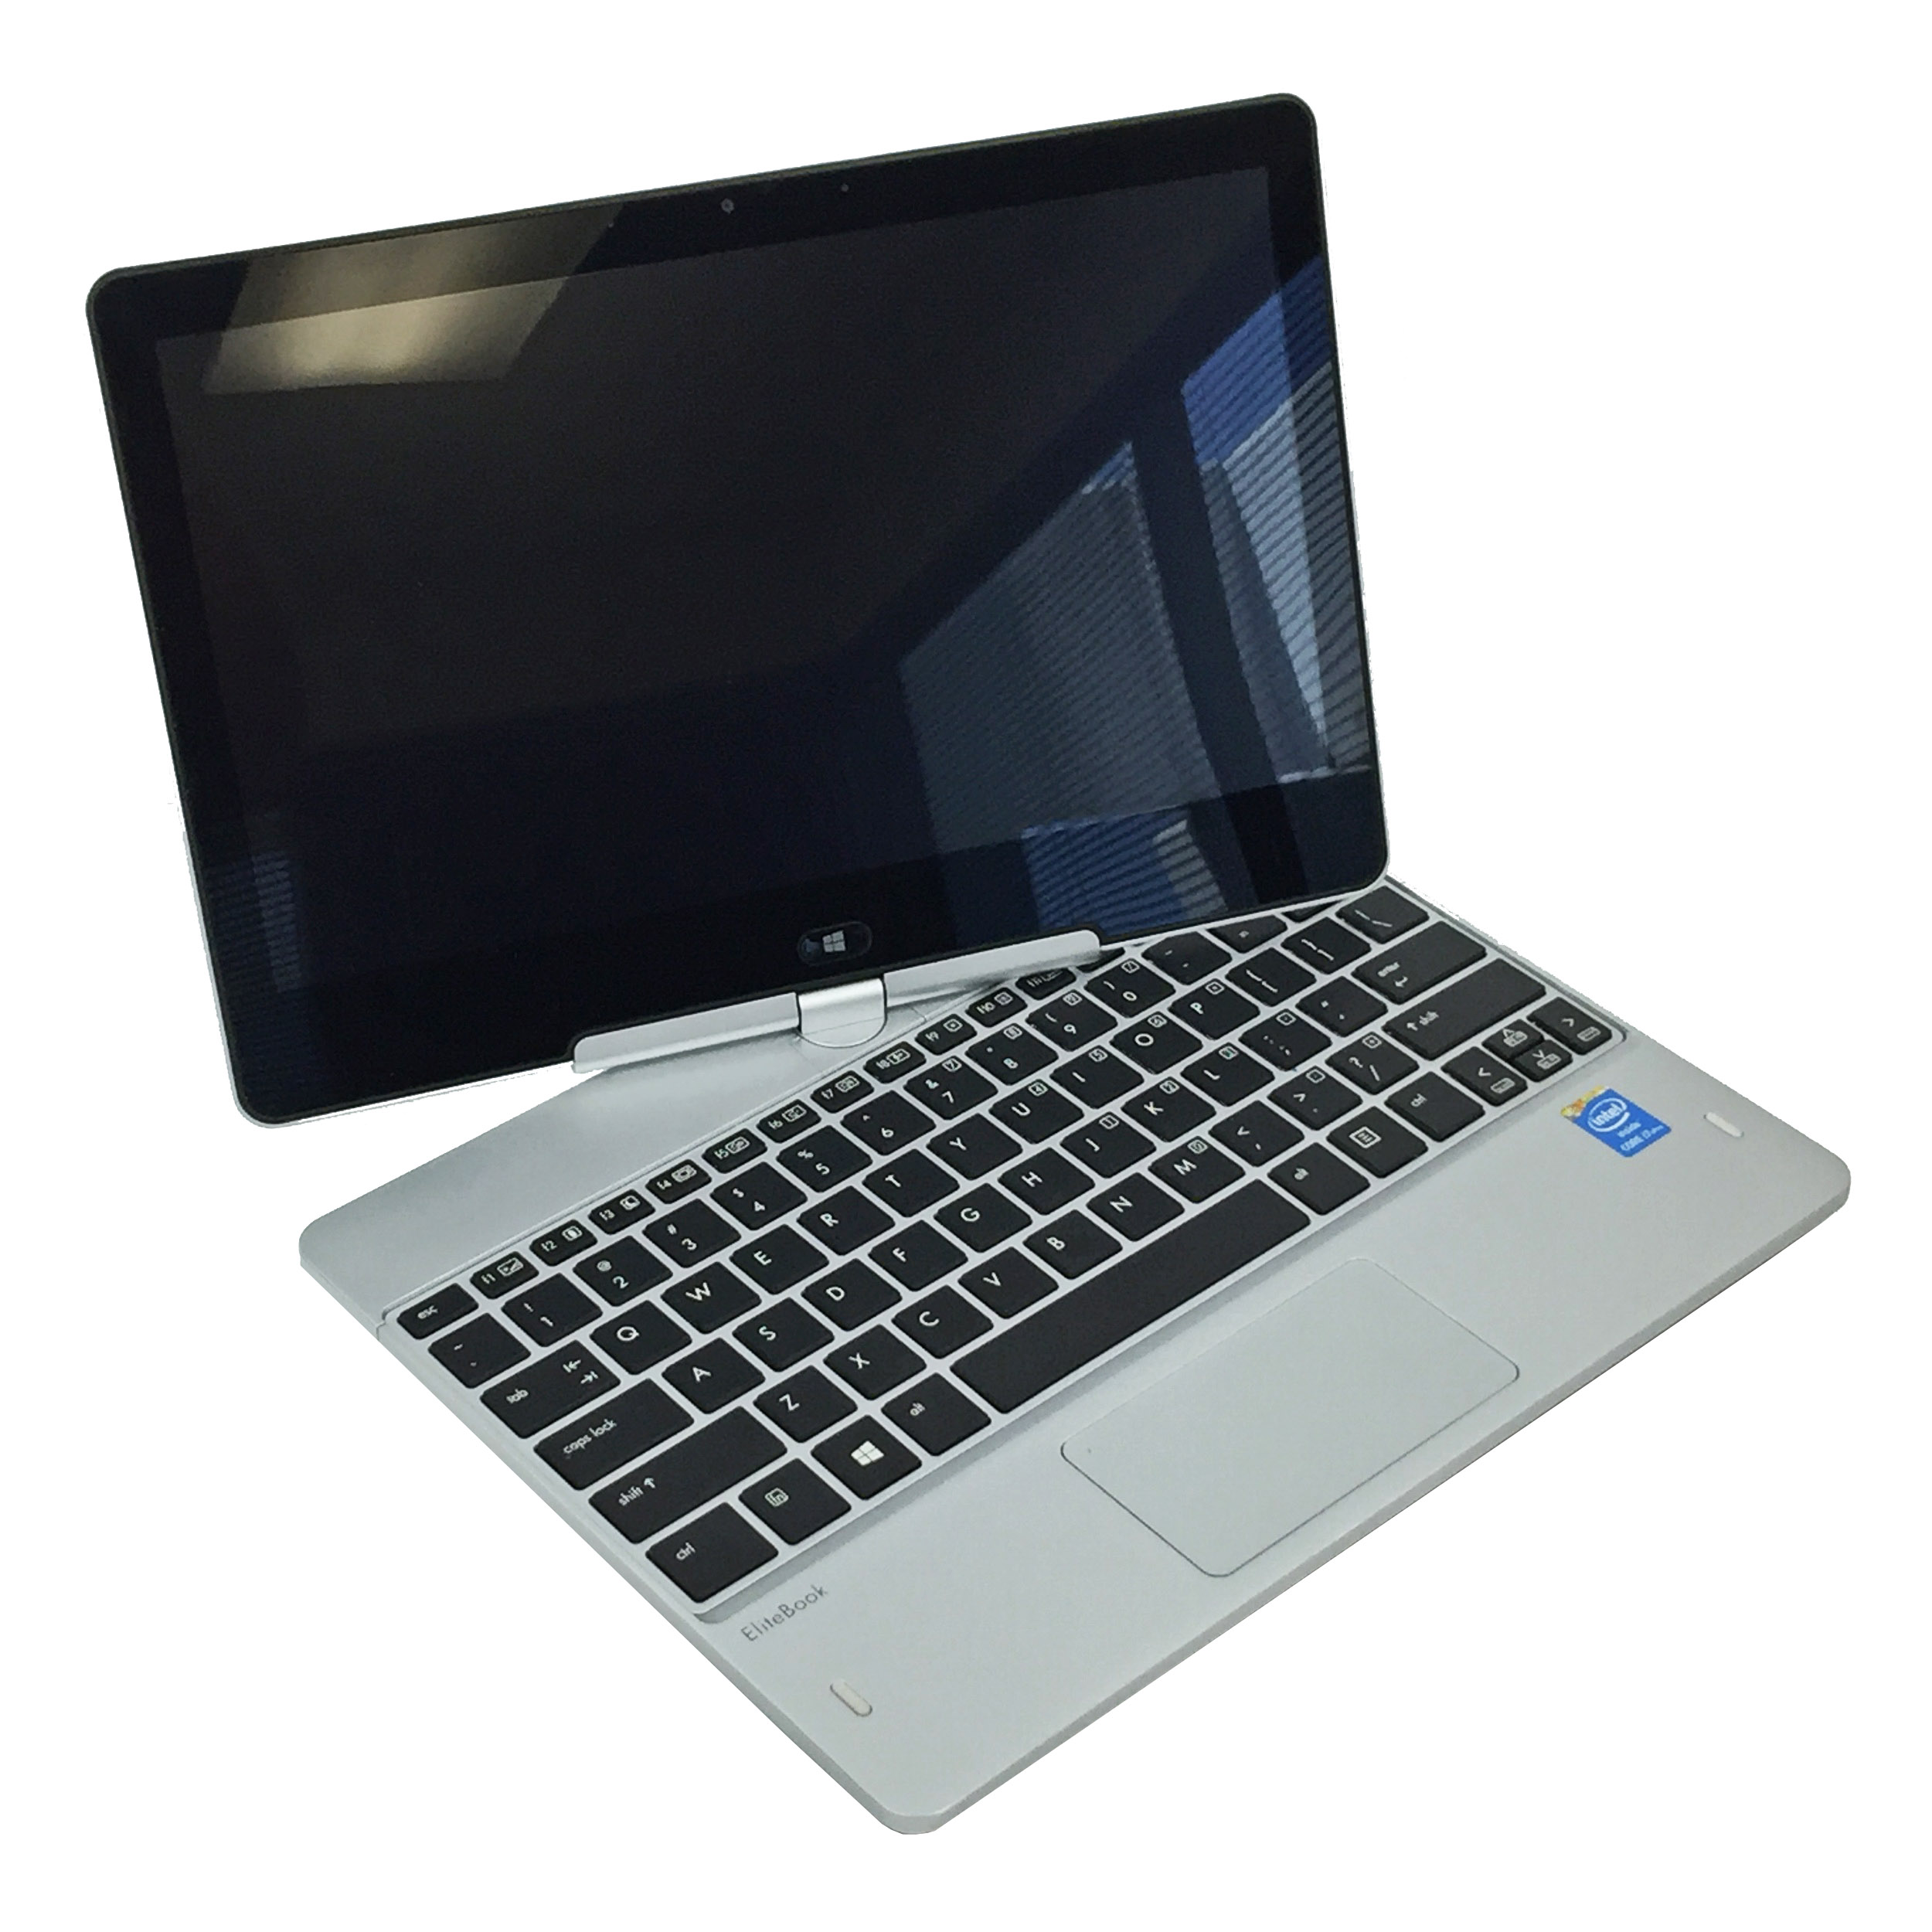 HP EliteBook Revolve 810 G2 Tablet Convertible Core i5-4300U 1.9 GHz 4GB RAM 256GB SSD 12 Display WiFi, Webcam, Certified Refurbished 6 Months Warranty